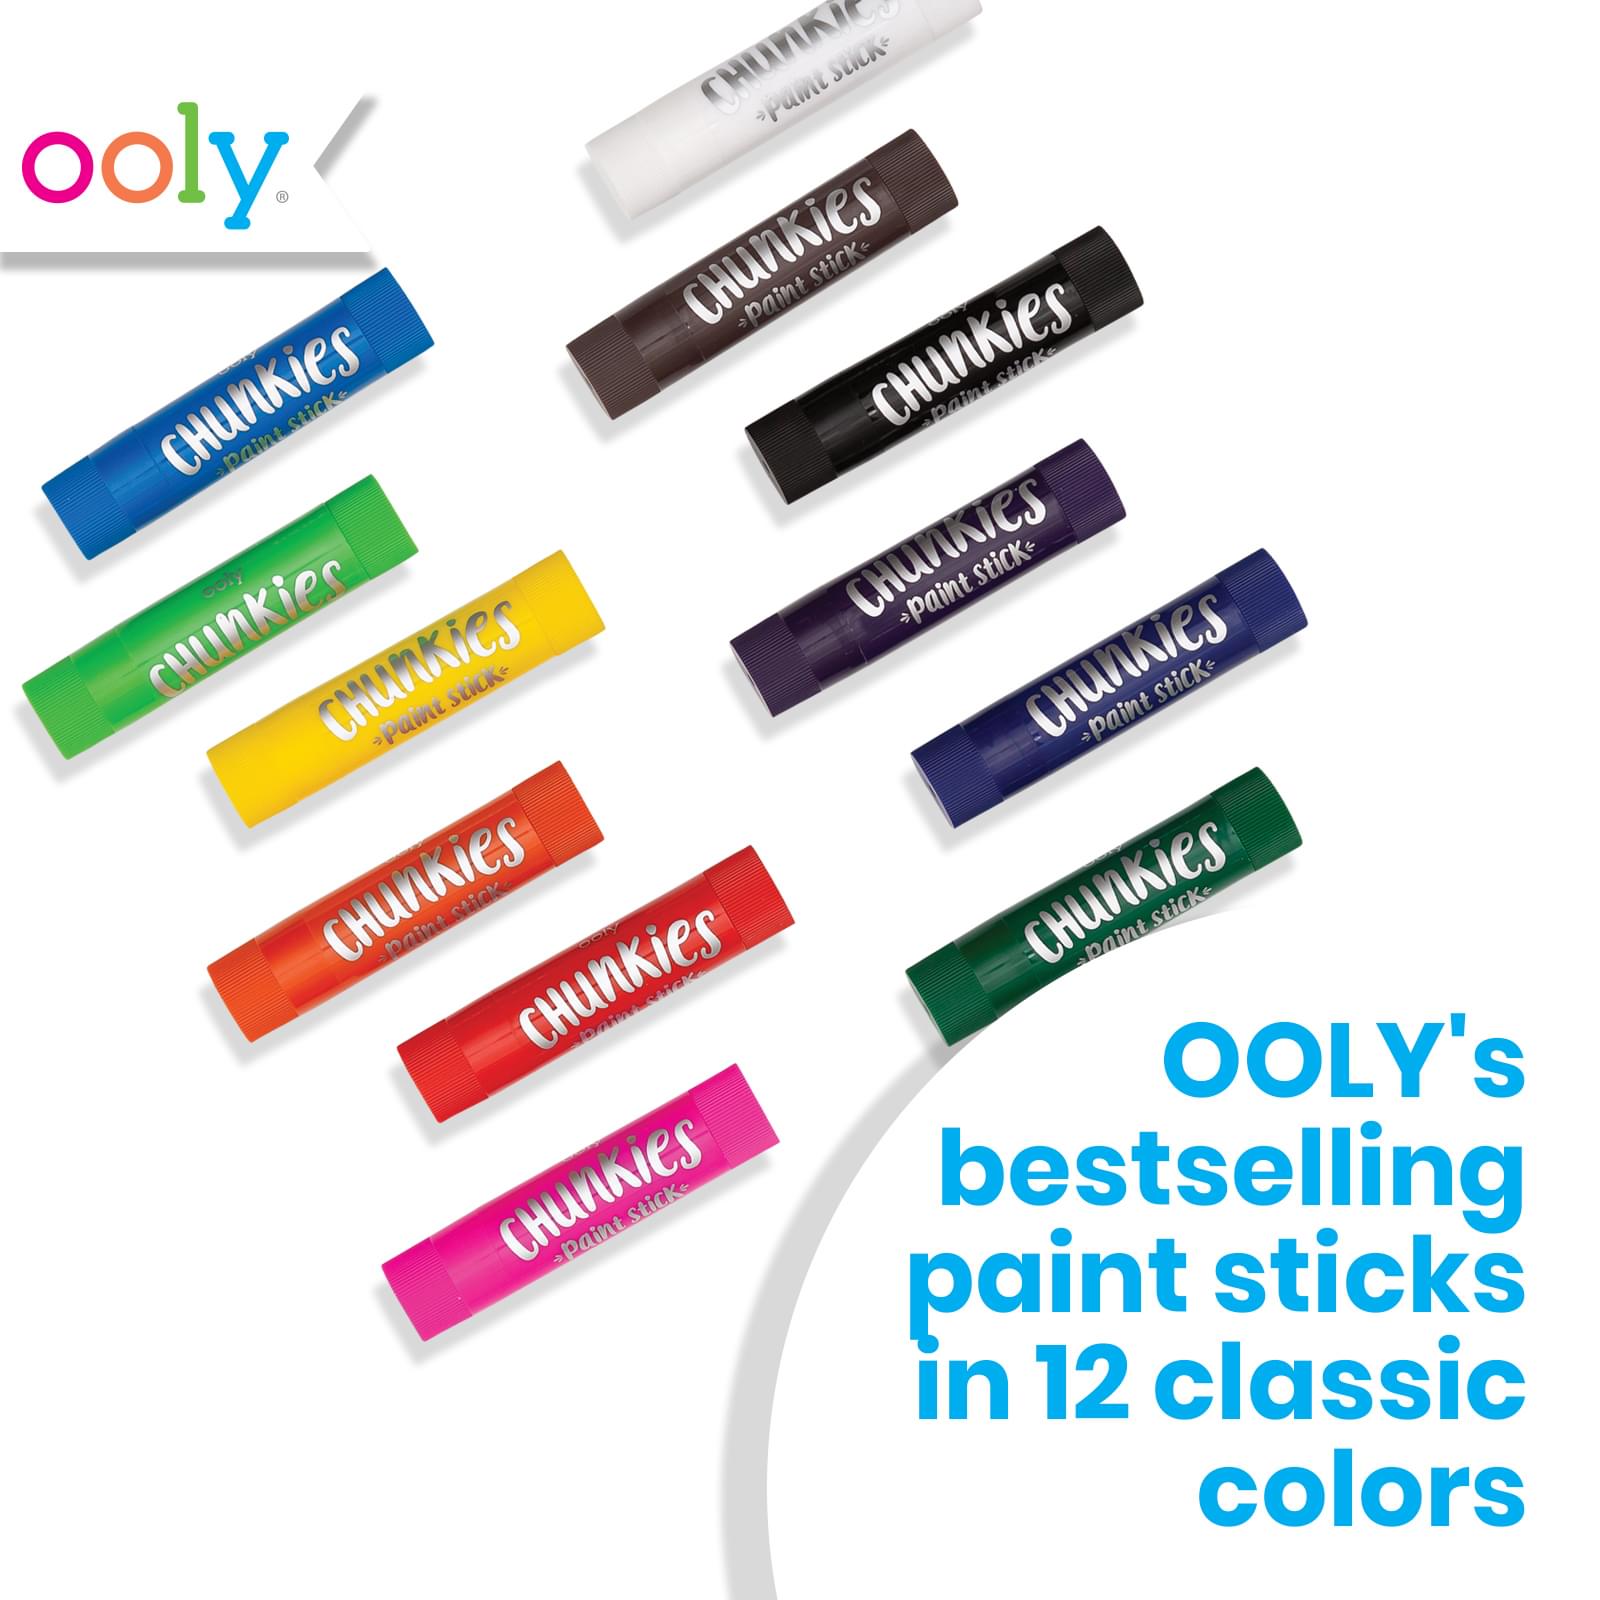 OOLY chunkies paint sticks paint sticks pastel 6 pcs 3 yrs+